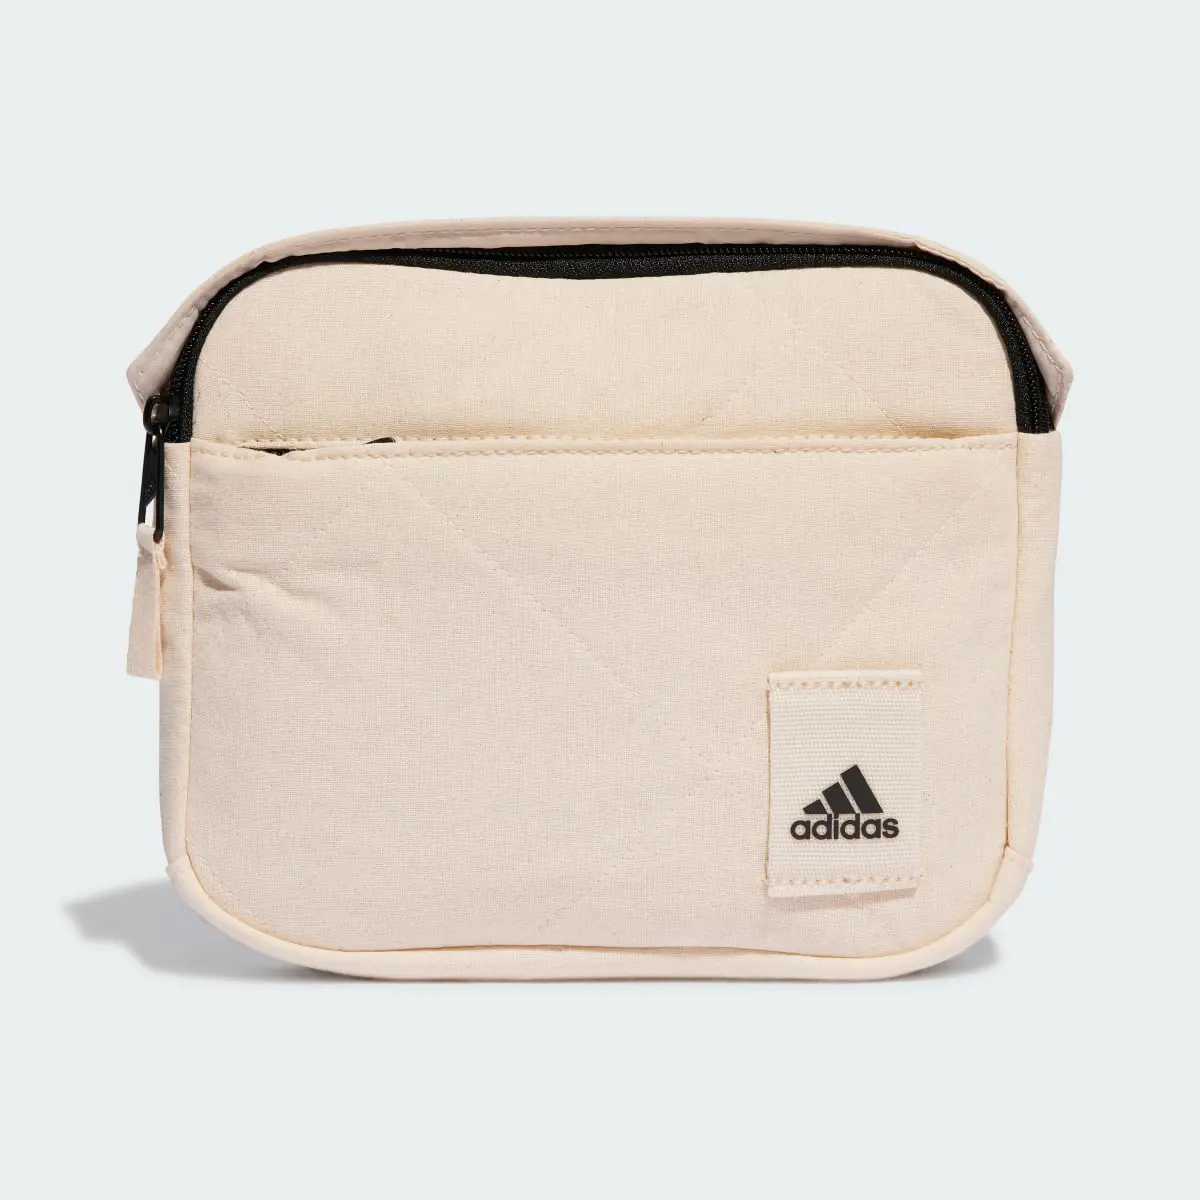 Adidas Lounge Cross-Body Bag. 1